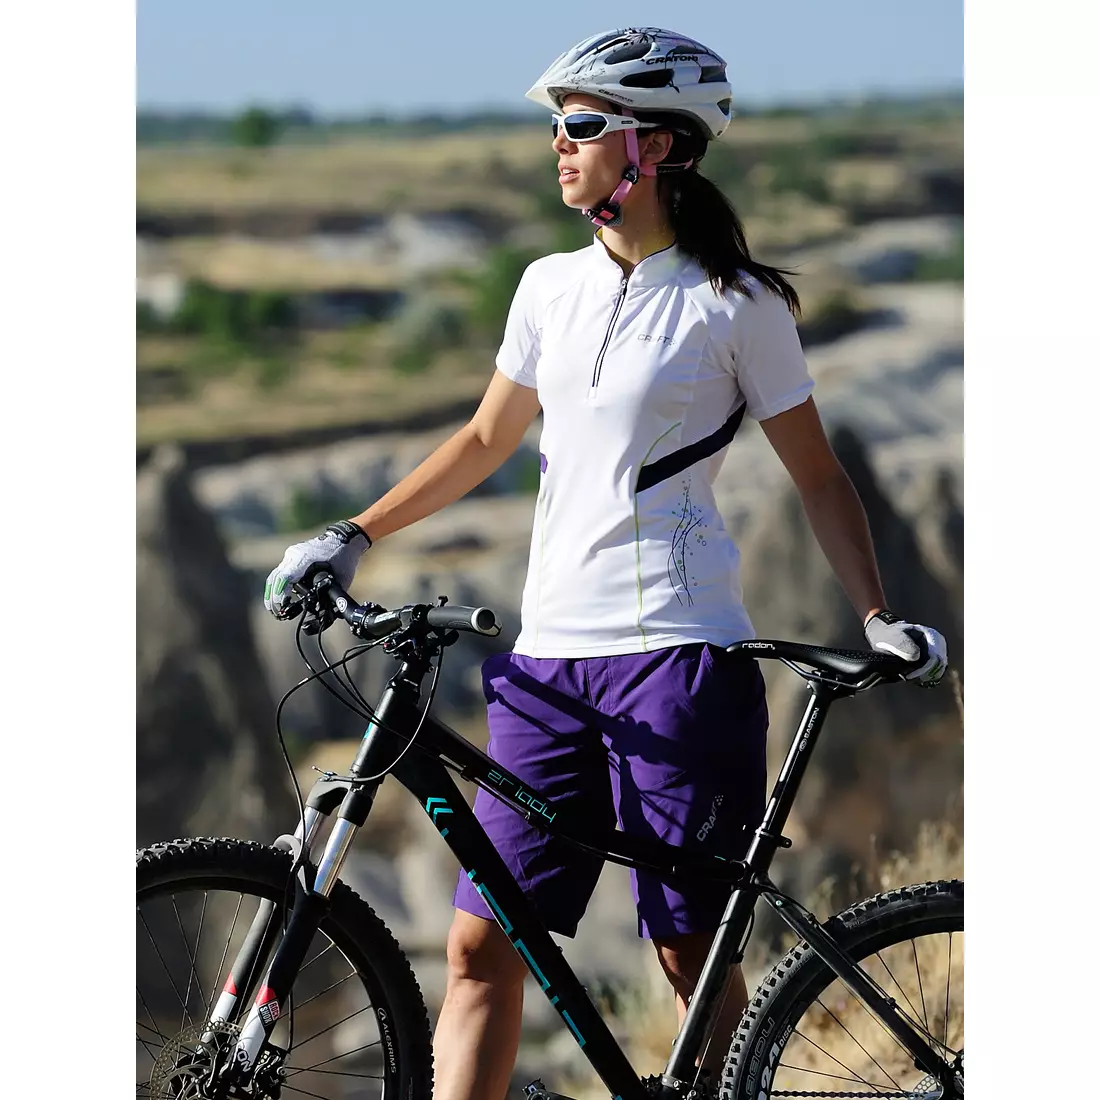 CRAFT ACTIVE BIKE 1901284-3900 - women's cycling jersey